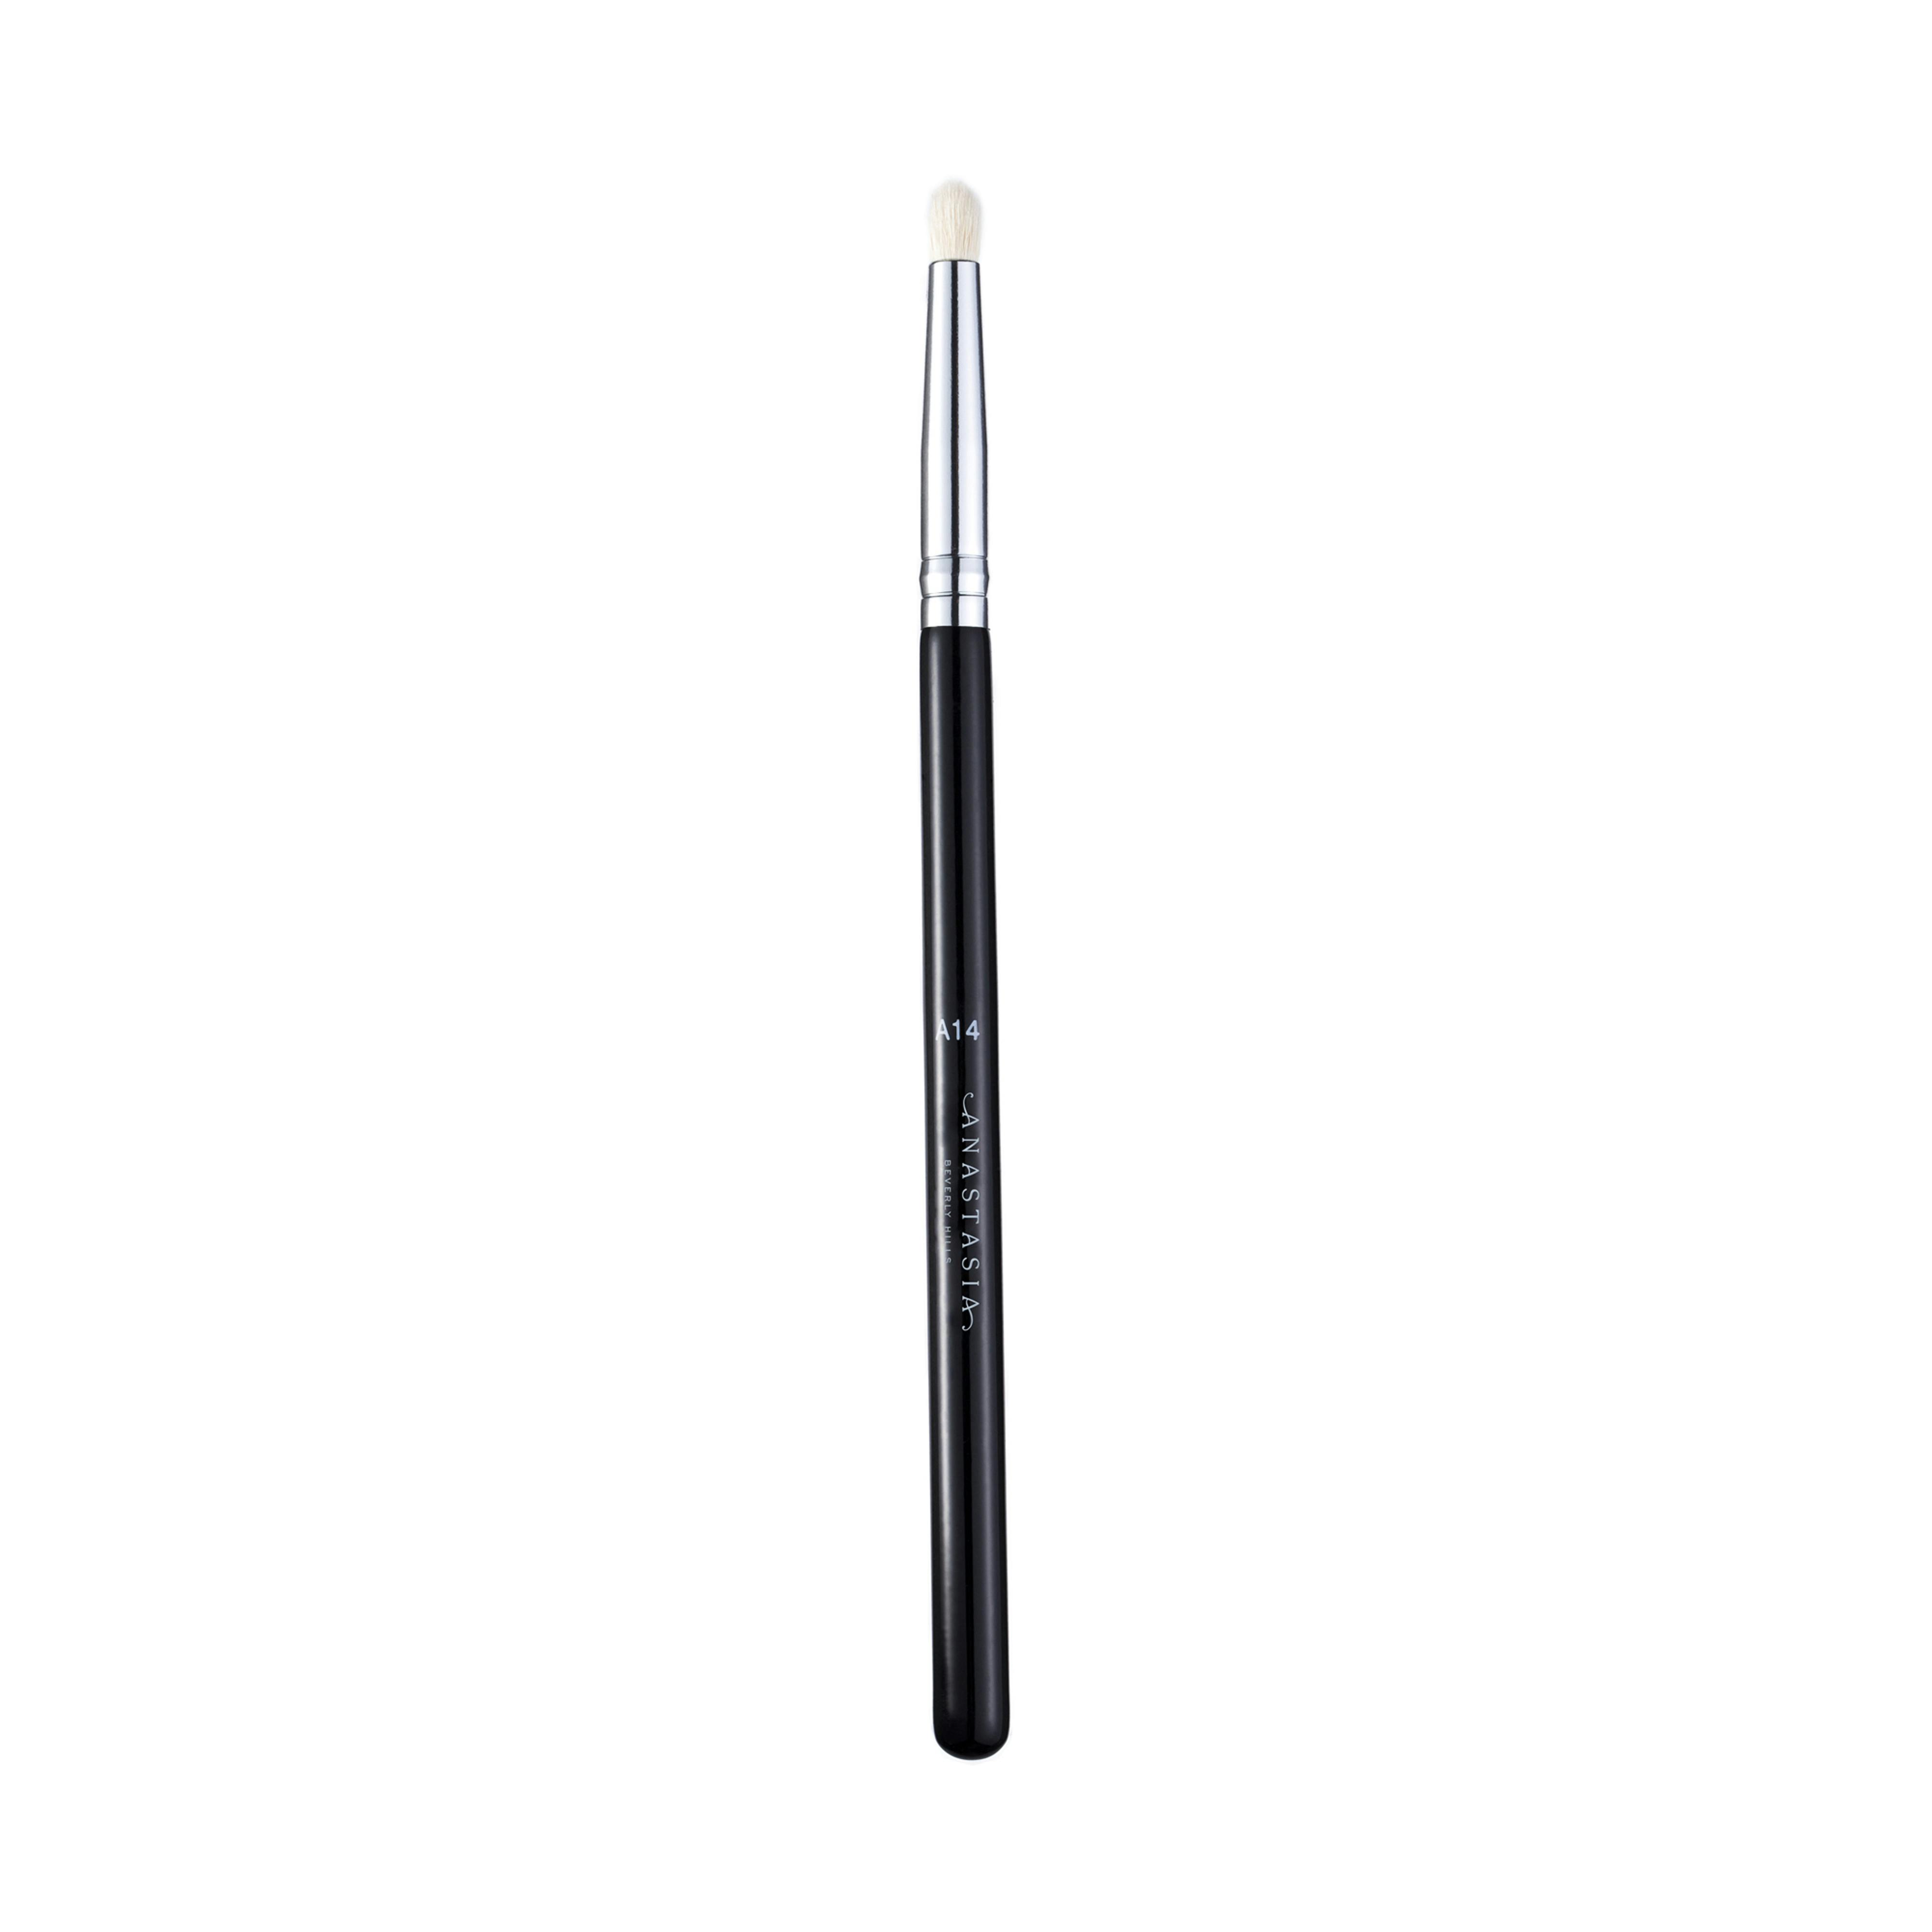 Anastasia Beverly Hills A14 Pro Pencil Brush 1 - 164.95 kr